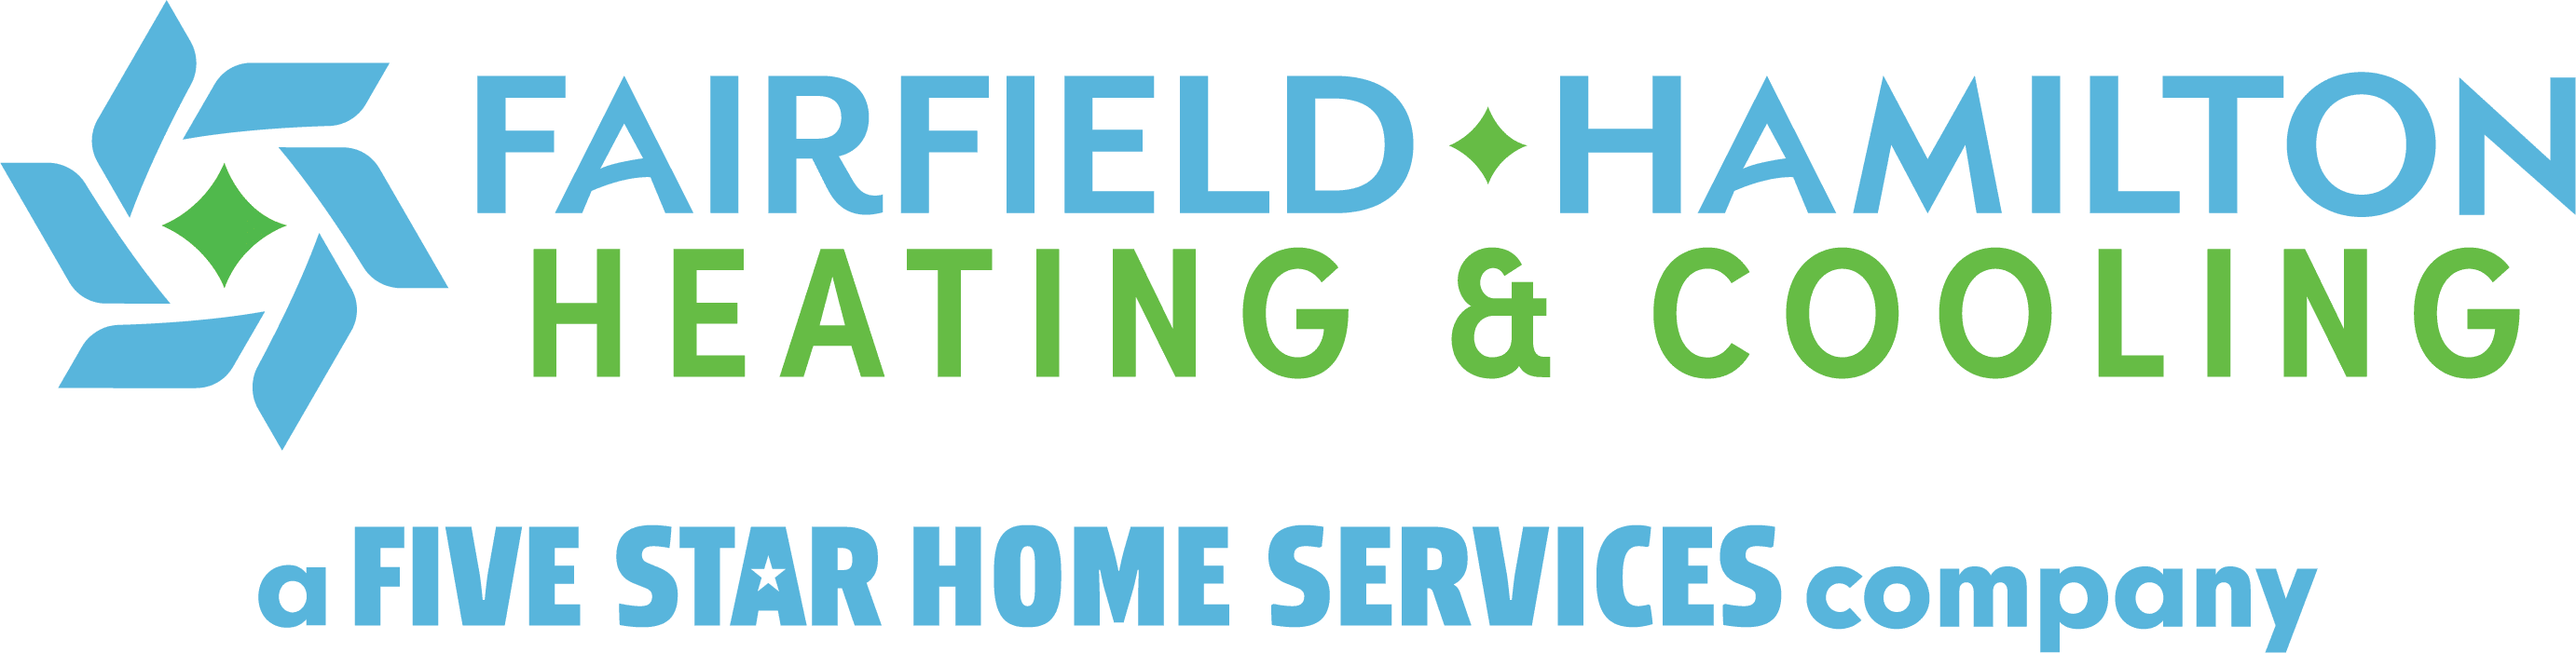 Fairfield - Hamilton Heating & Cooling